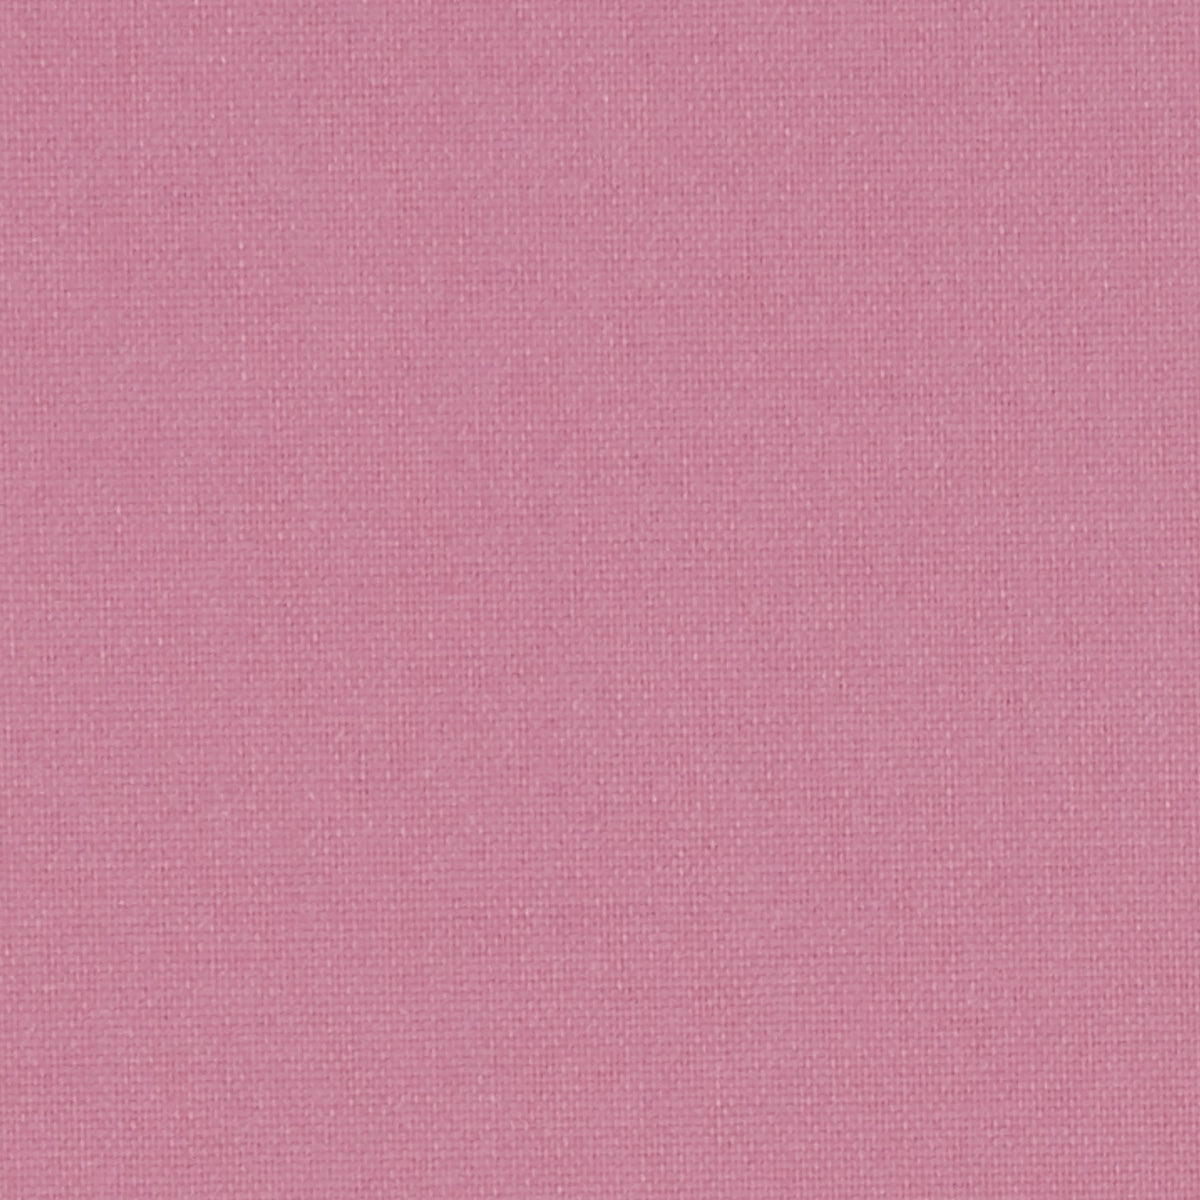 Polaris Classic Pink Vertical Blind Slat